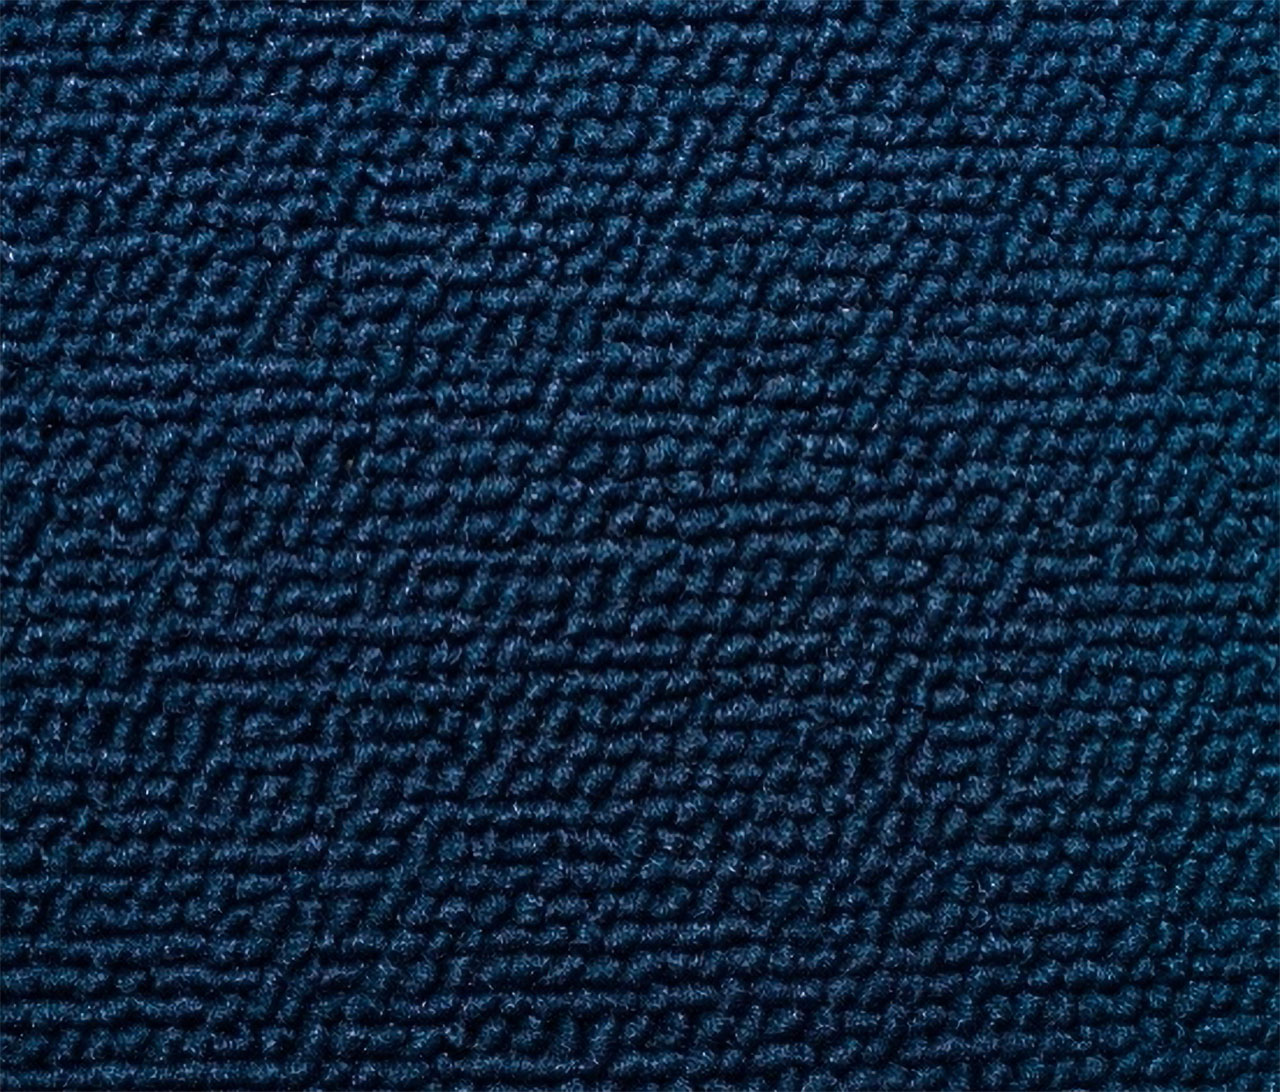 Holden Standard HD Standard Wagon E31 Combine Blue Carpet (Image 1 of 1)